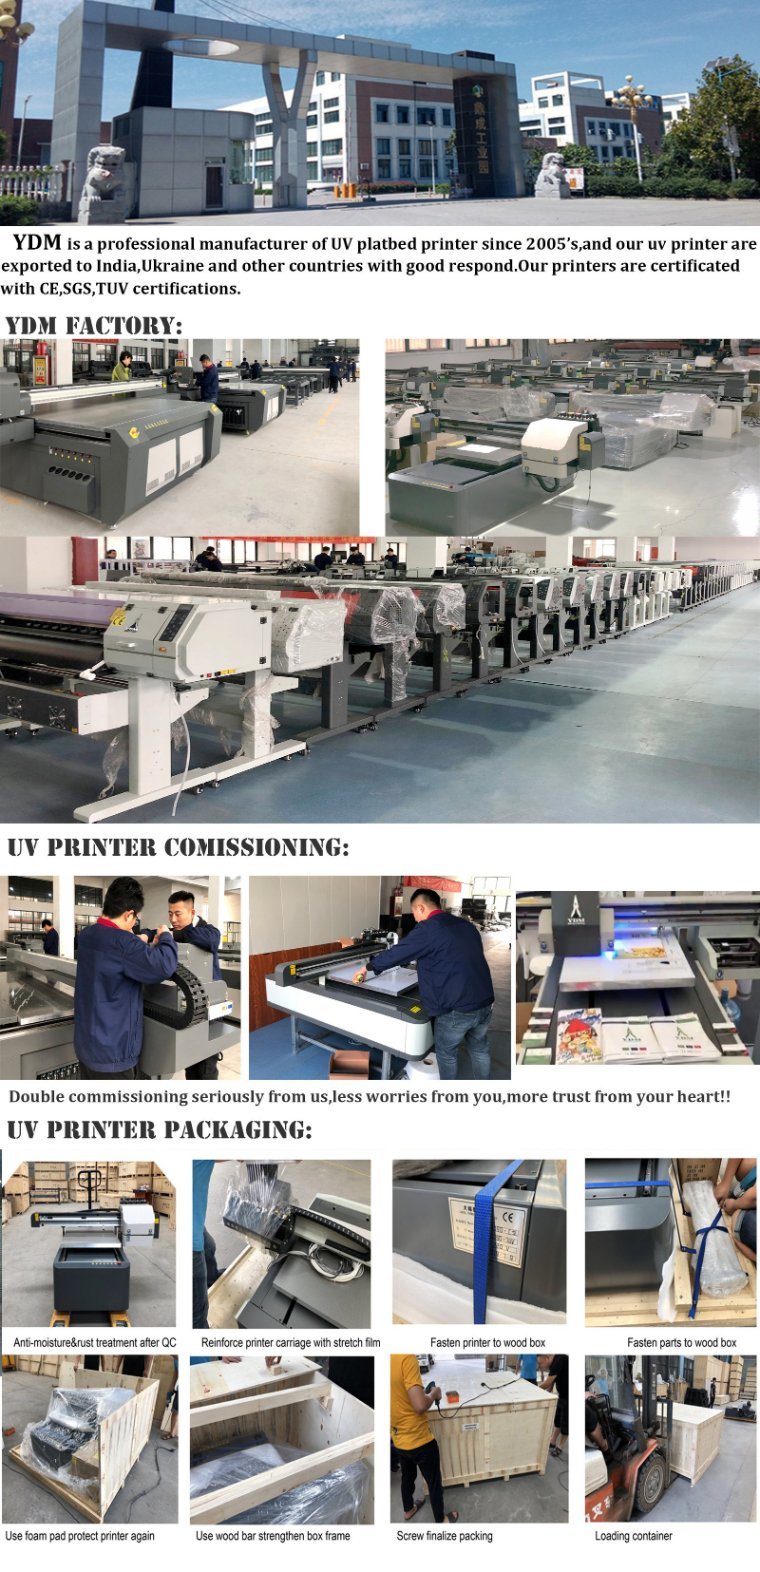 UV 2030 Industrial Large Glass Printing Machine